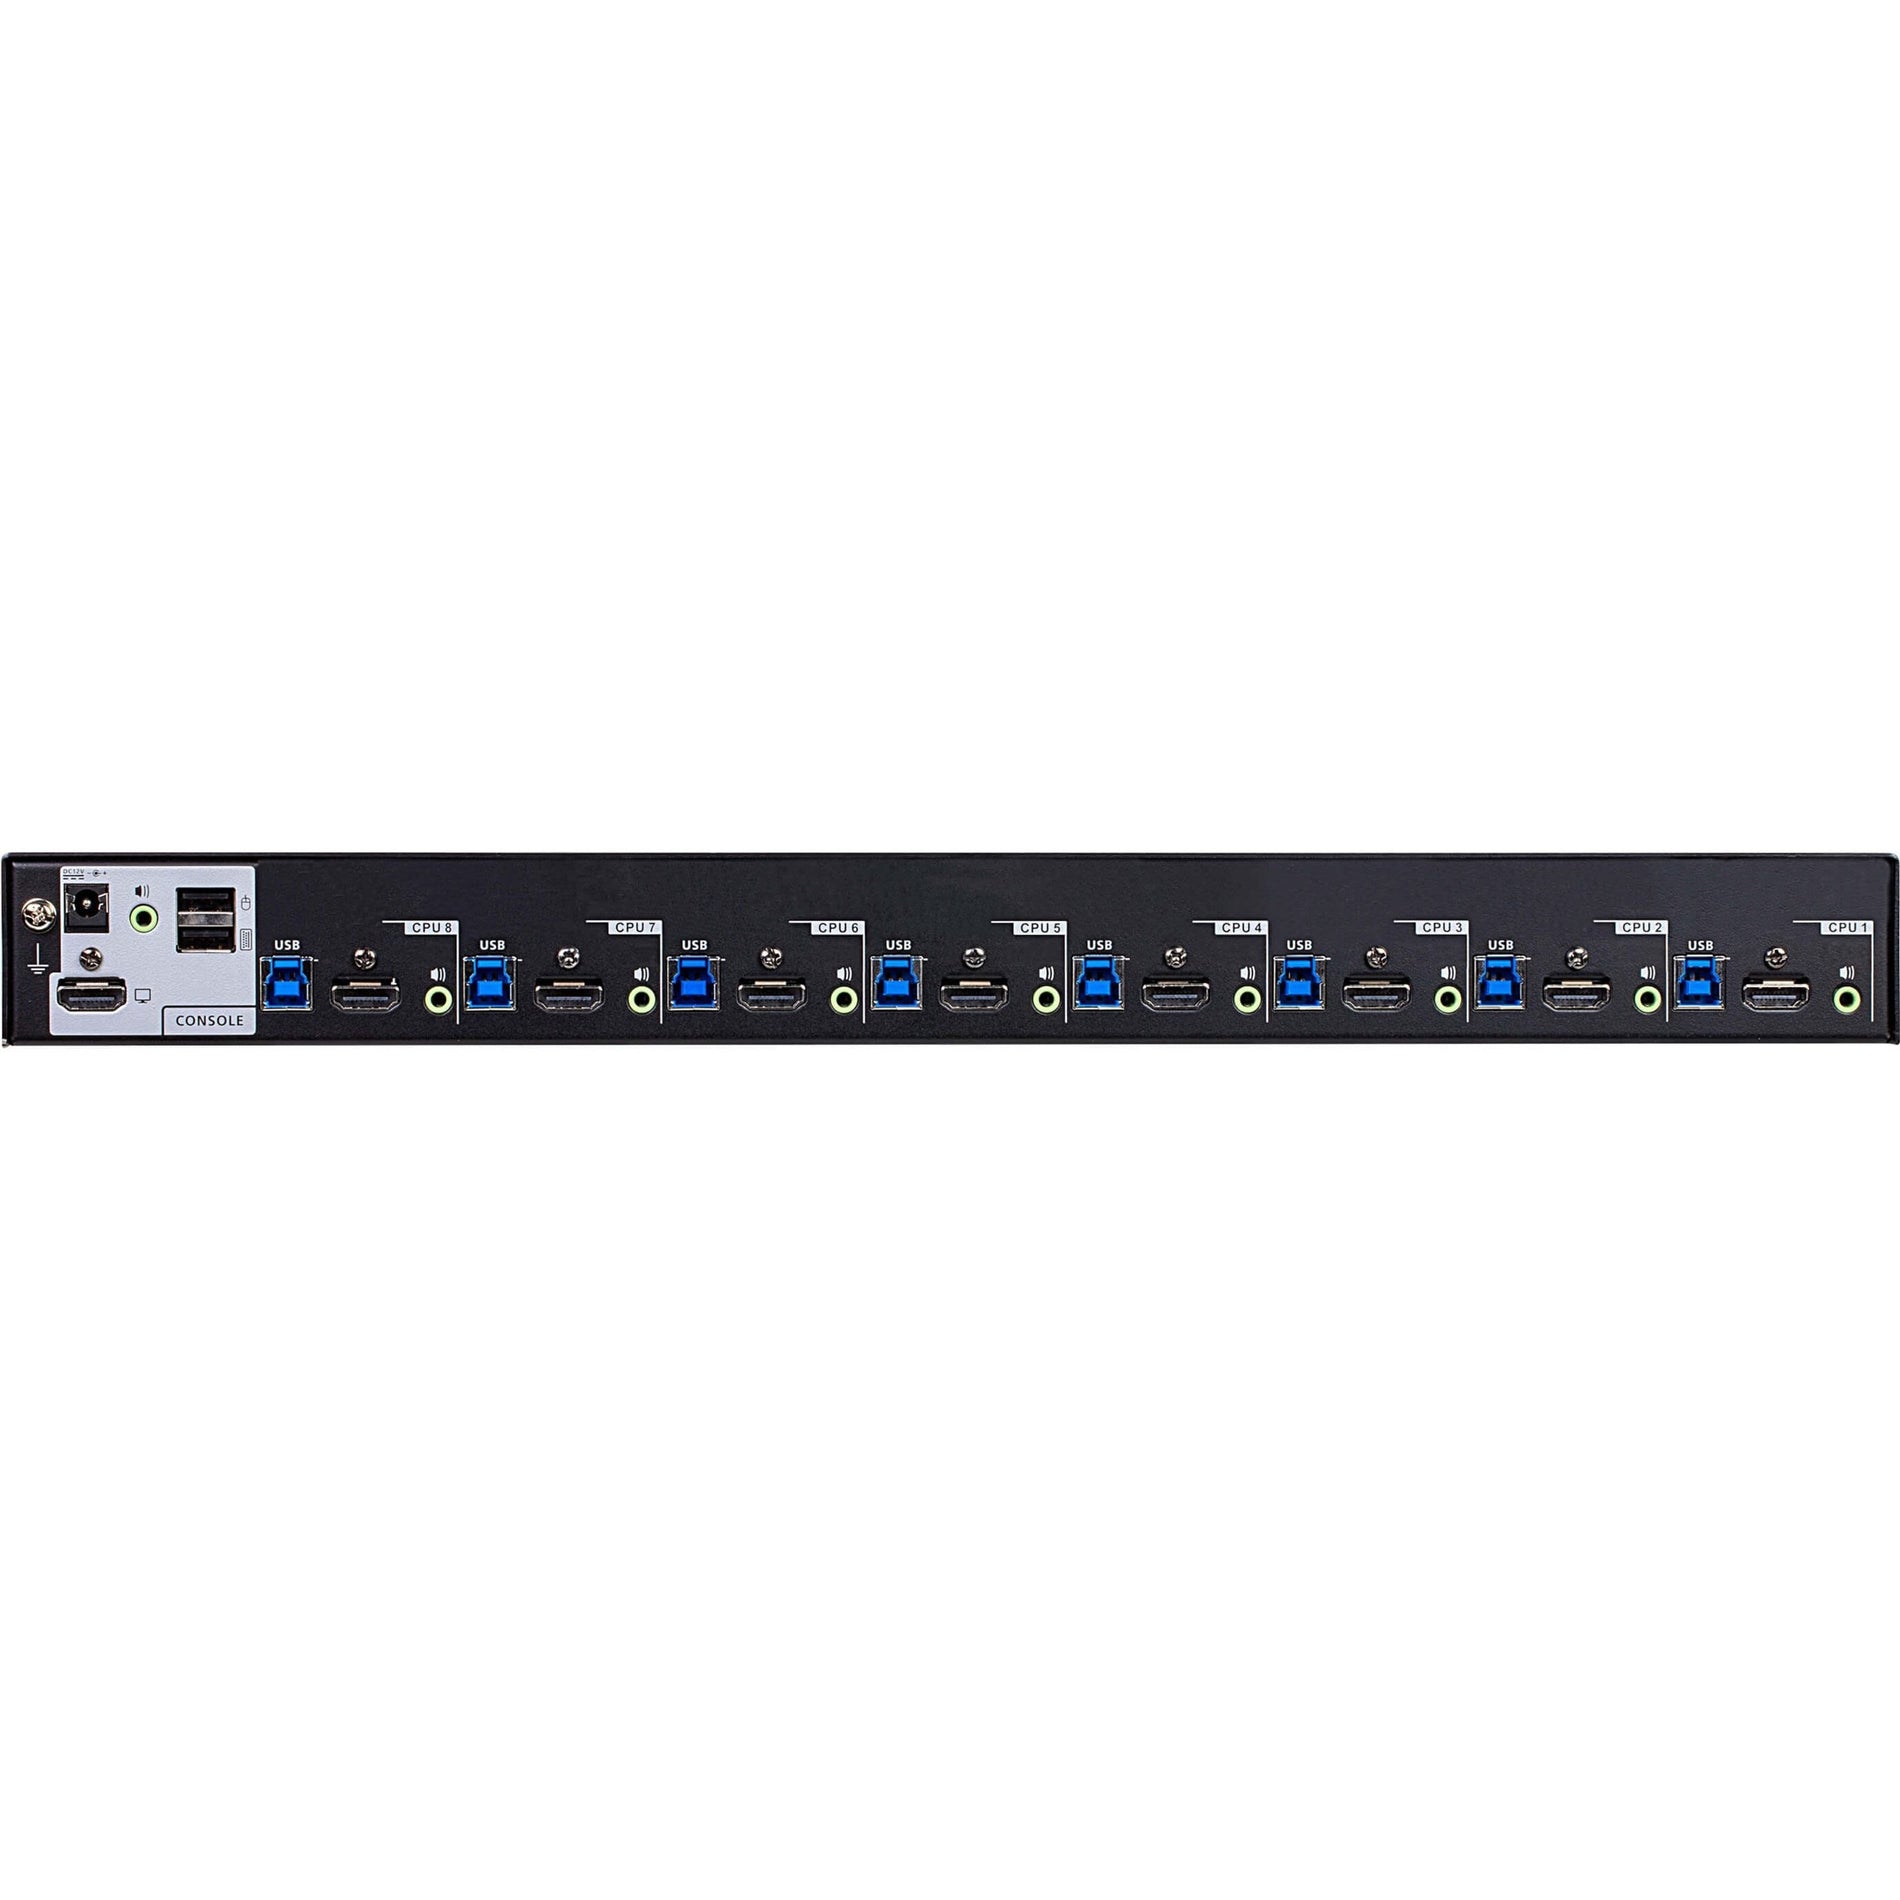 ATEN CS18208 16-Port USB 3.0 4K HDMI KVM Switch with Rack Mounting Kit, Maximum Video Resolution 4096 x 2160